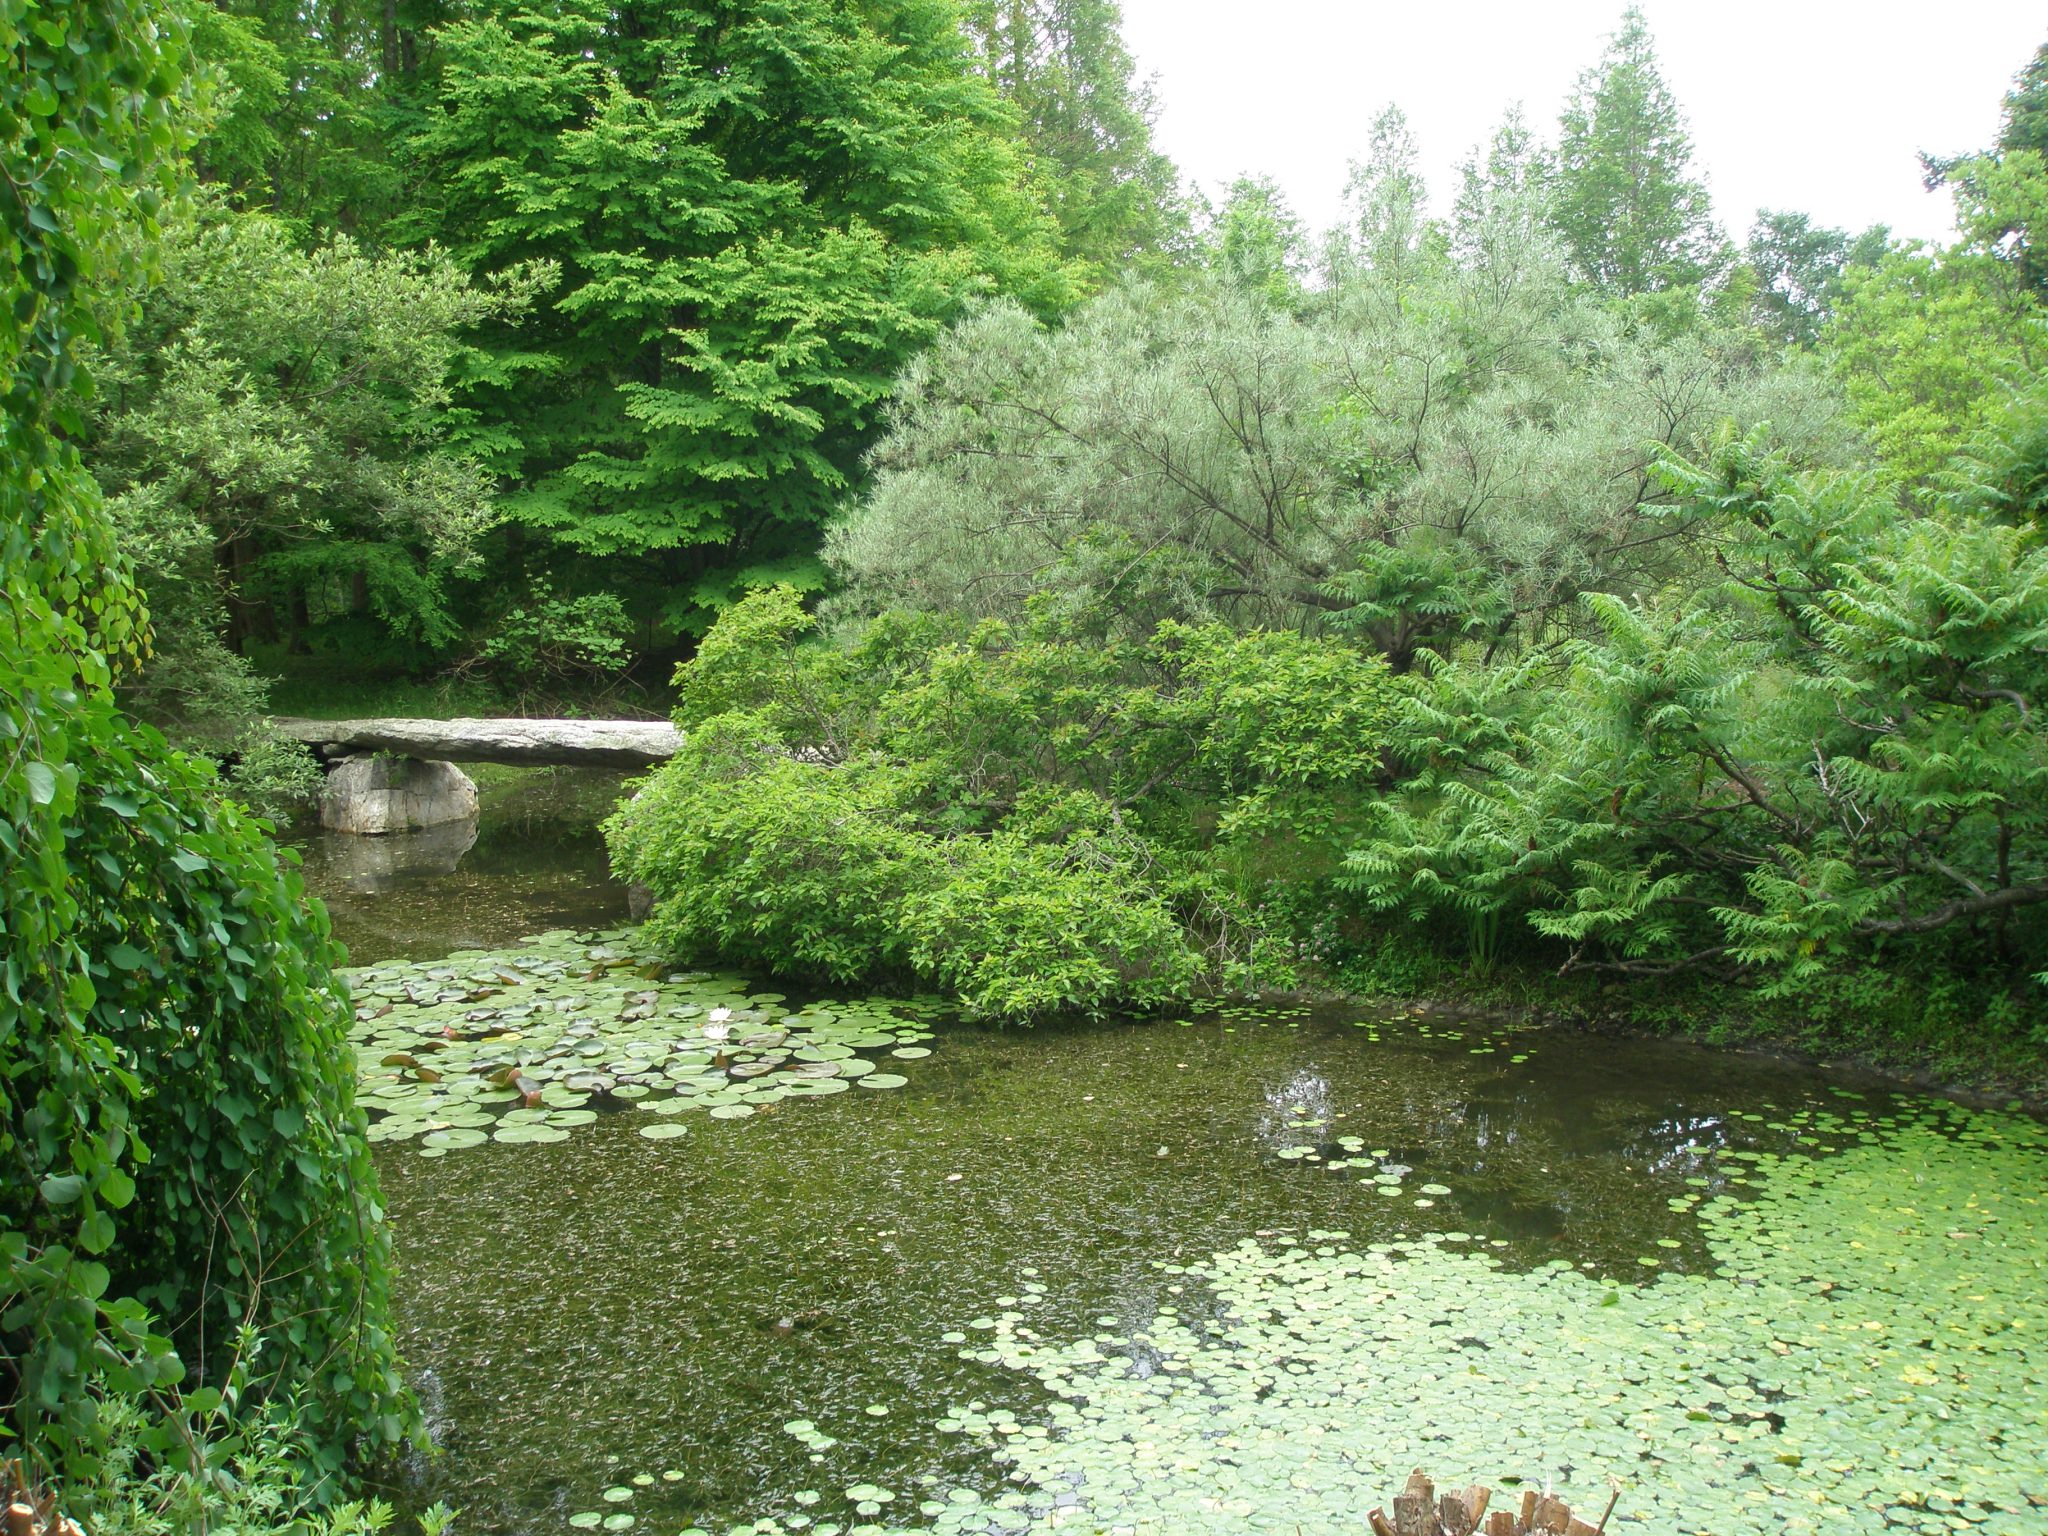 A Giant Flint Stone forms a Footbridge across the Lake